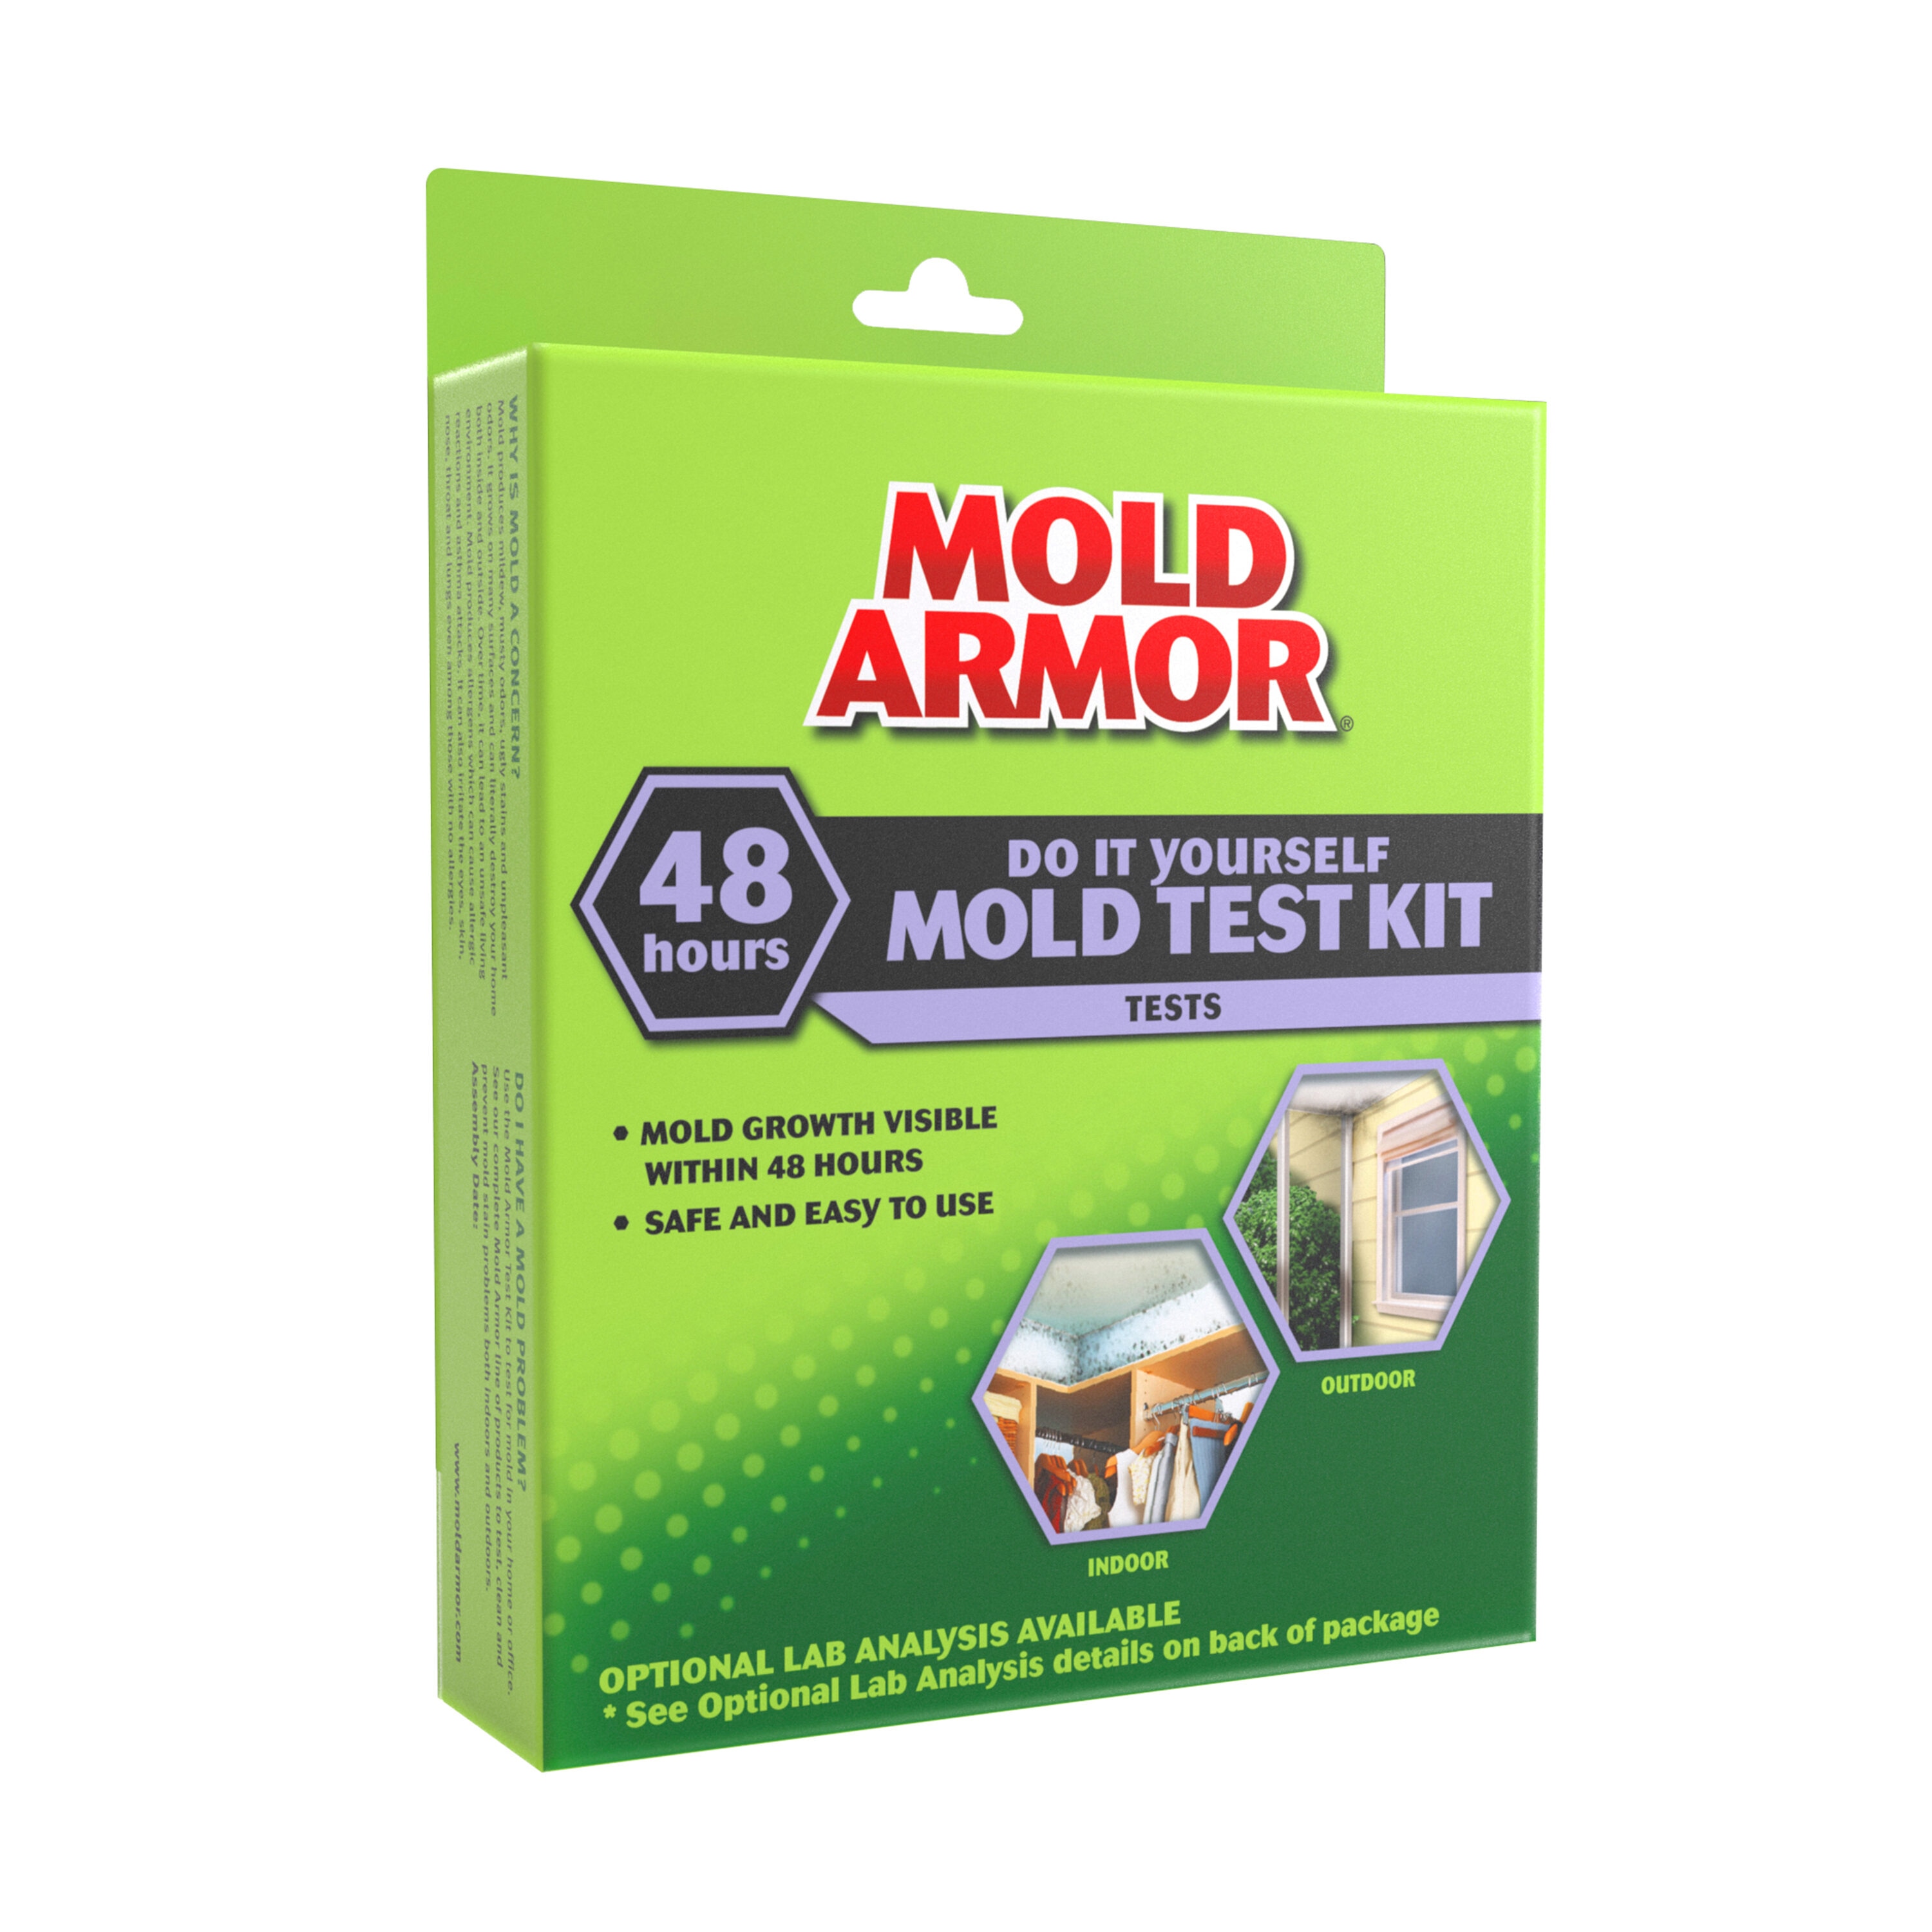 DIY Mold Test Kit, Pro-Grade